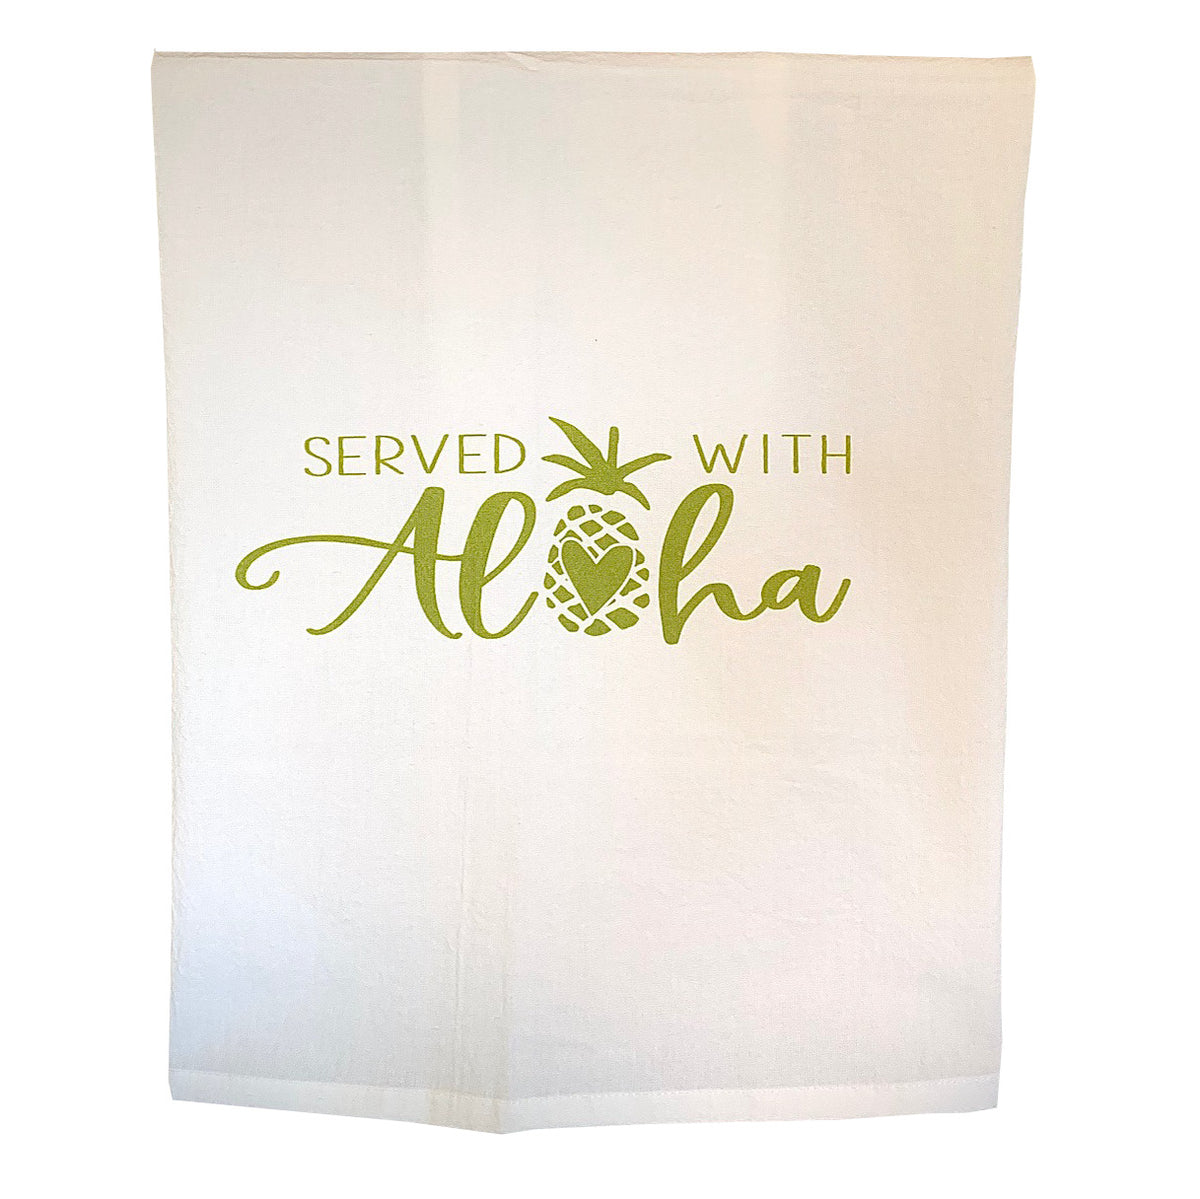 Pop-Up Mākeke - Sal Terrae - Flour Sack Kitchen Towel - Served with Aloha - Green Pineapple - Front View